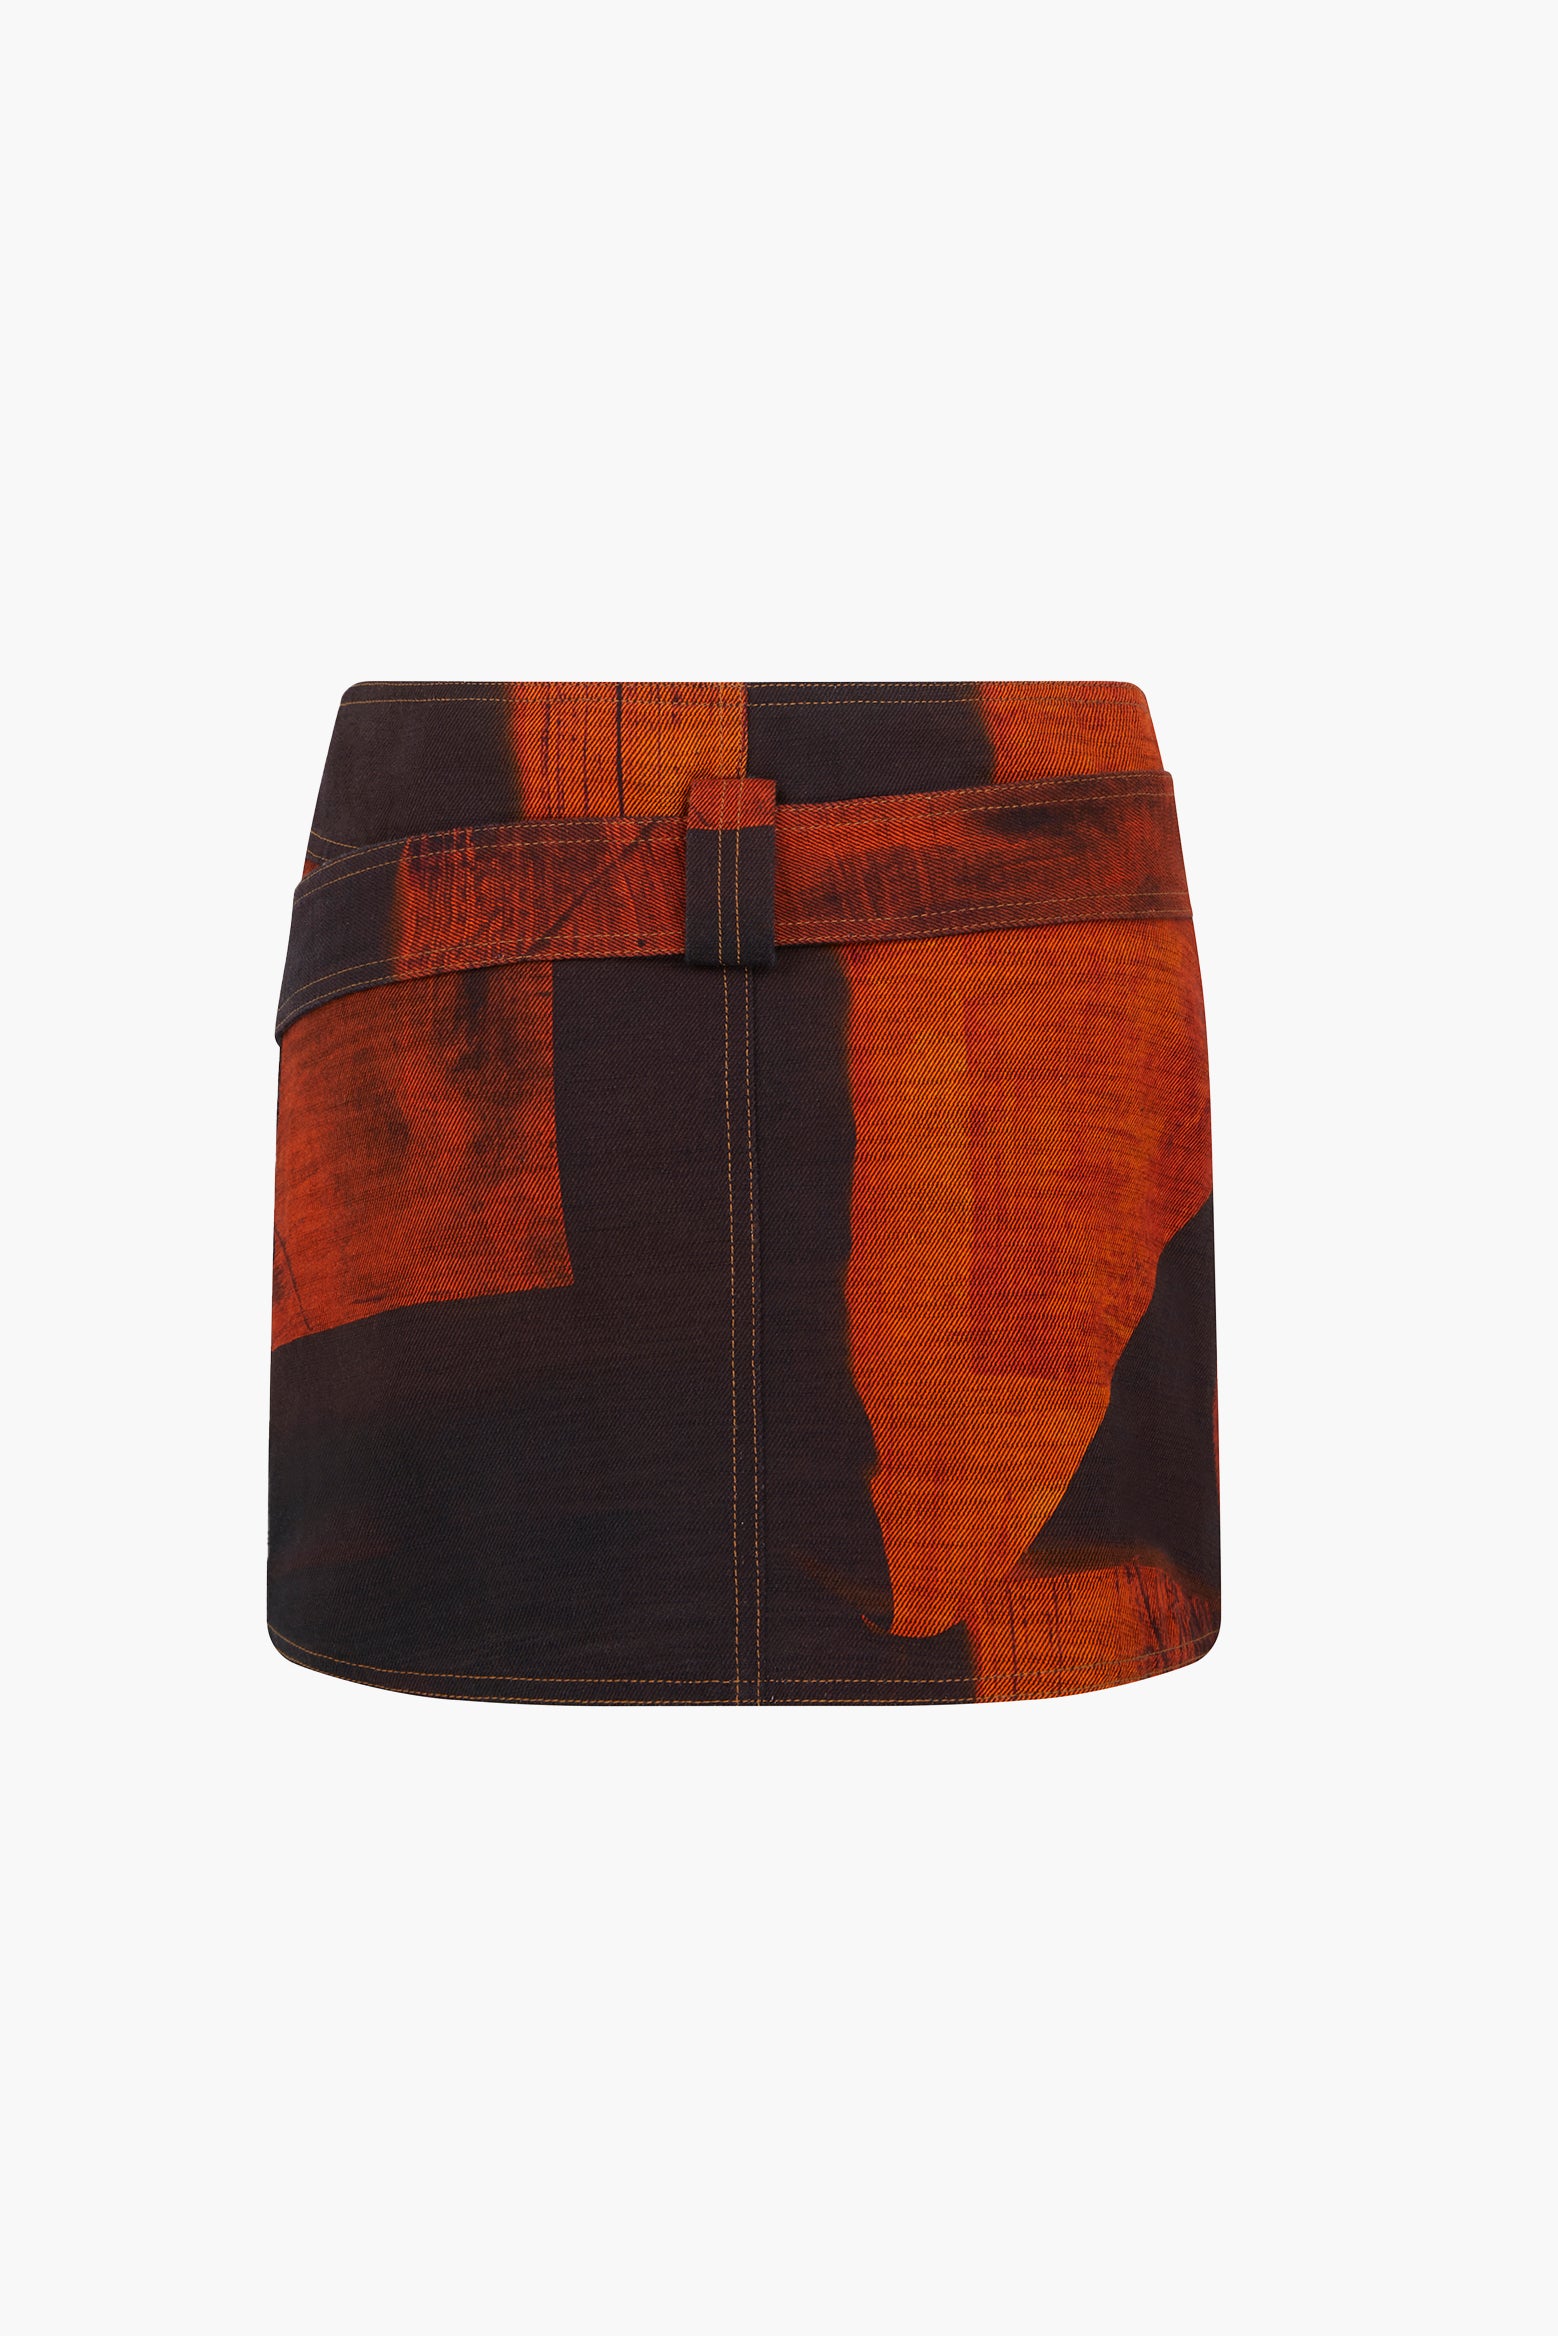 Louisa Ballou Mini Denim Wrap Skirt available at The New Trend Australia.